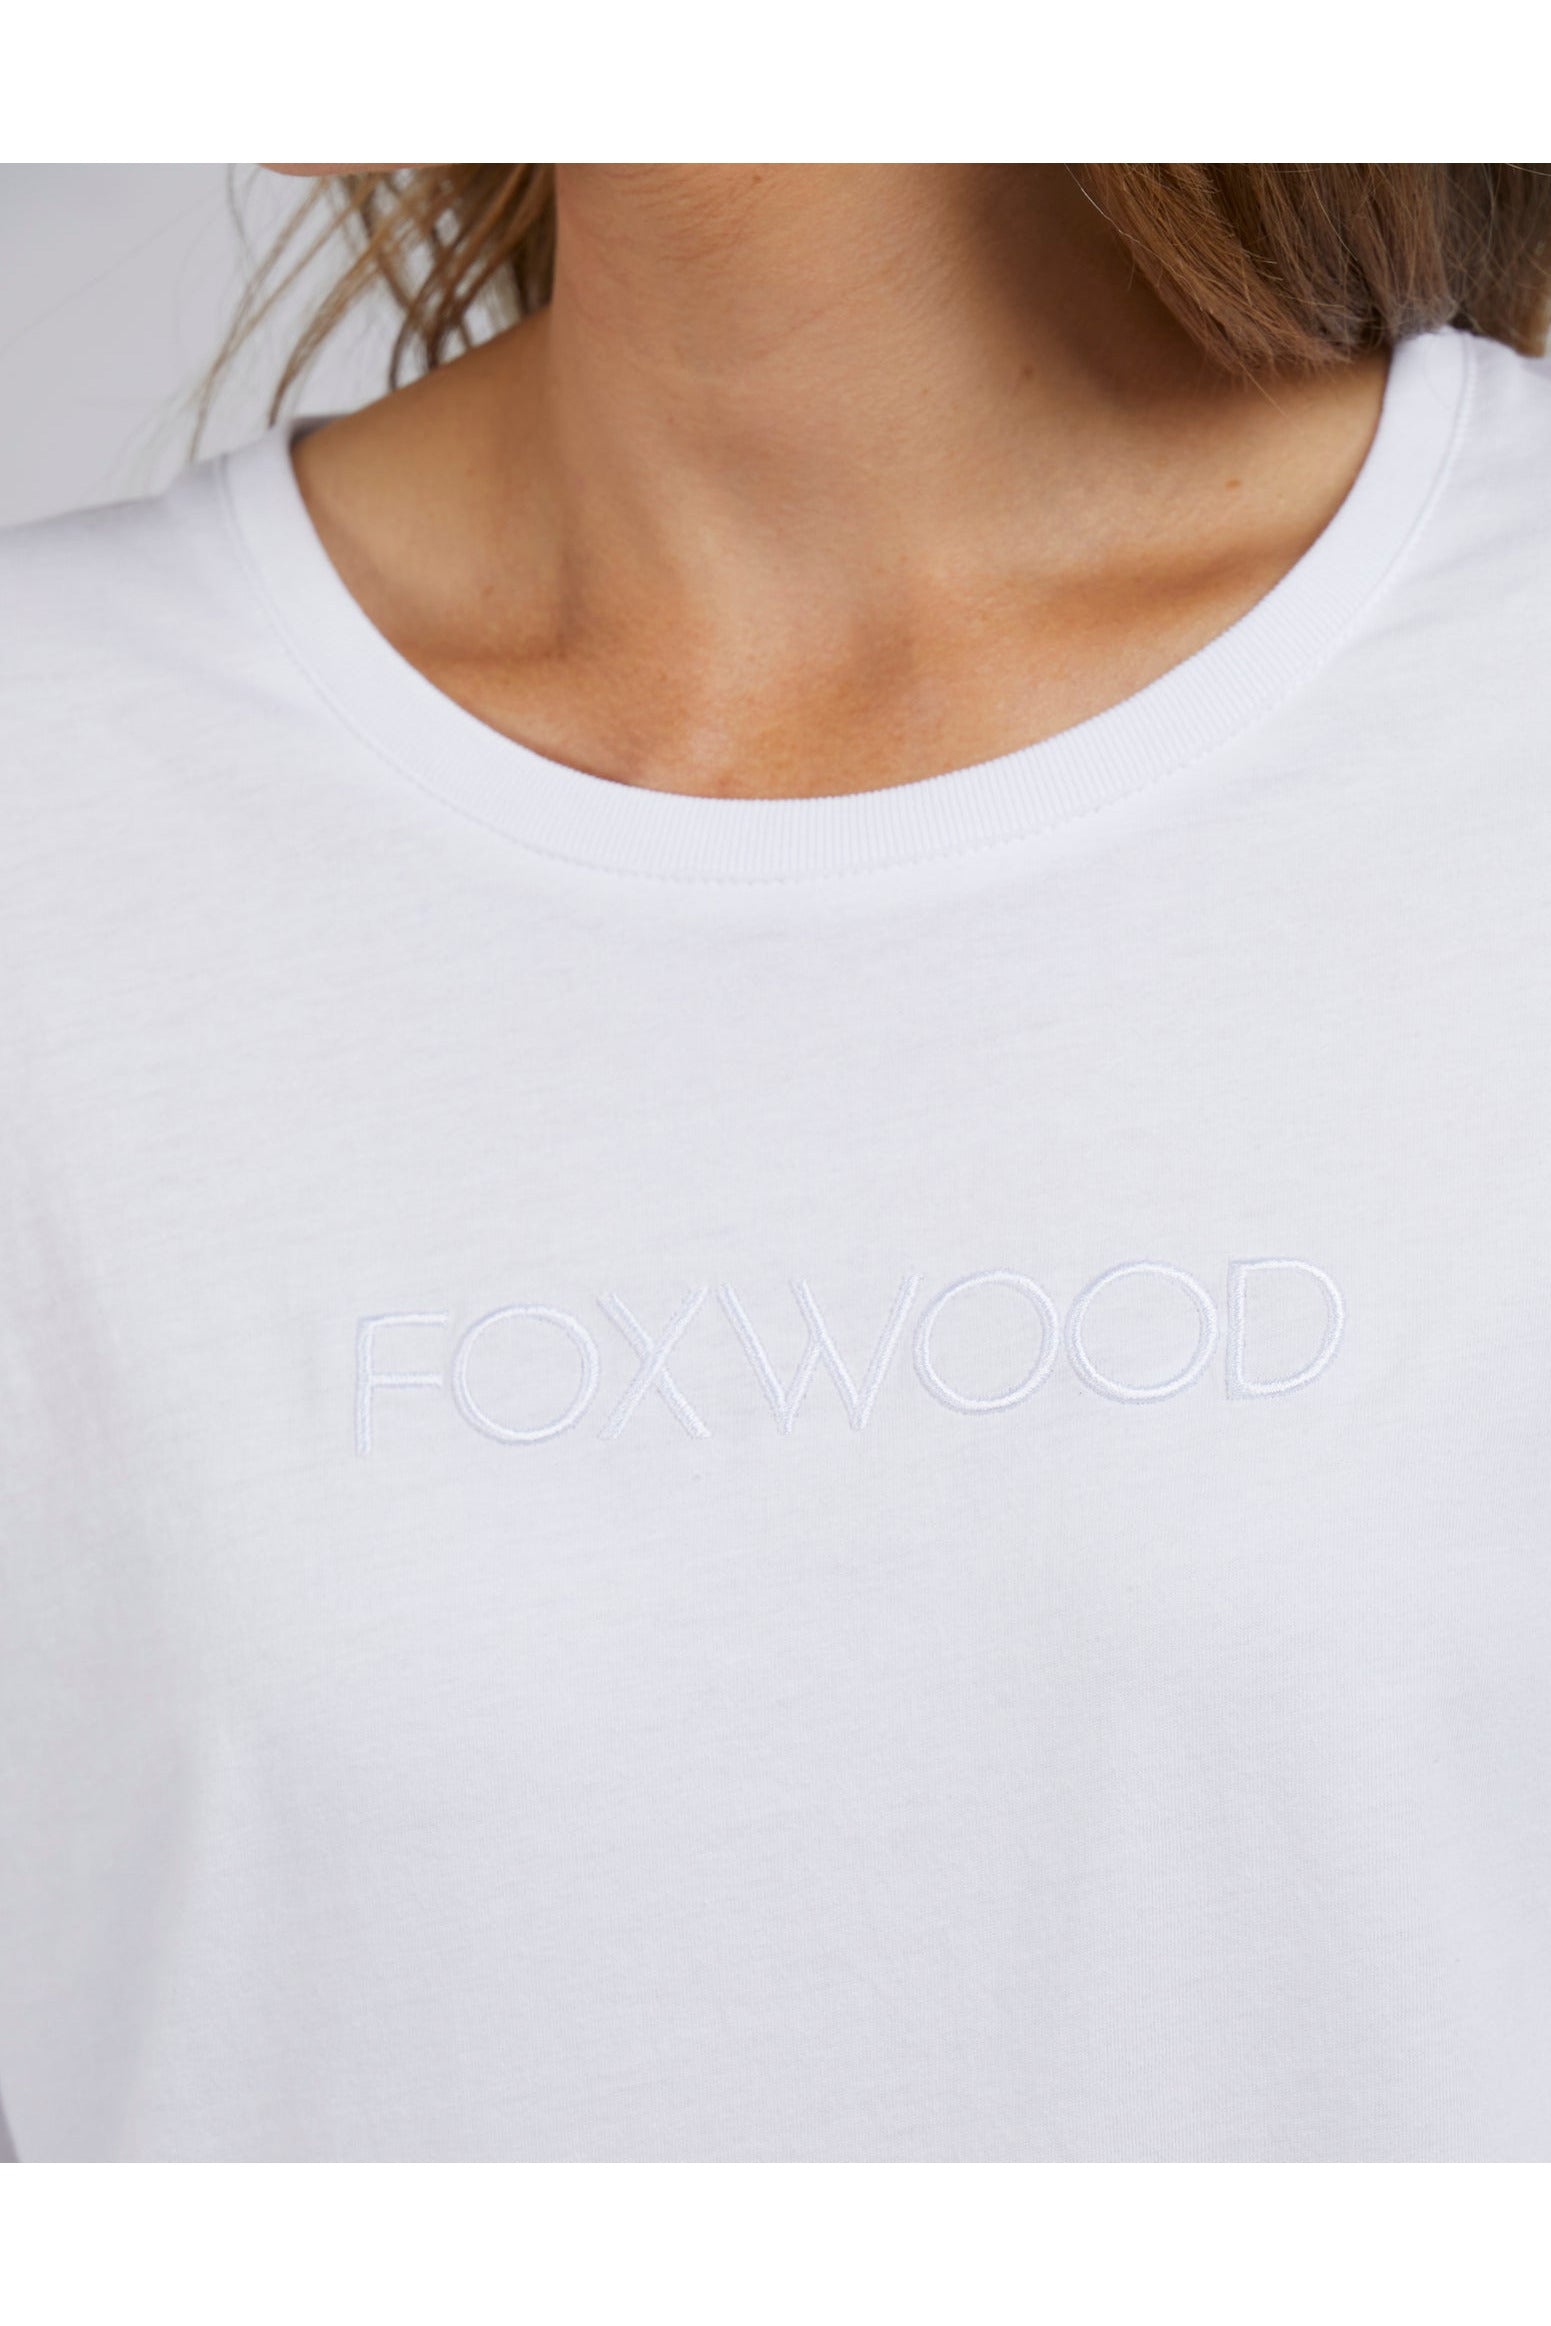 FOXWOOD L/S TEE - WHITE